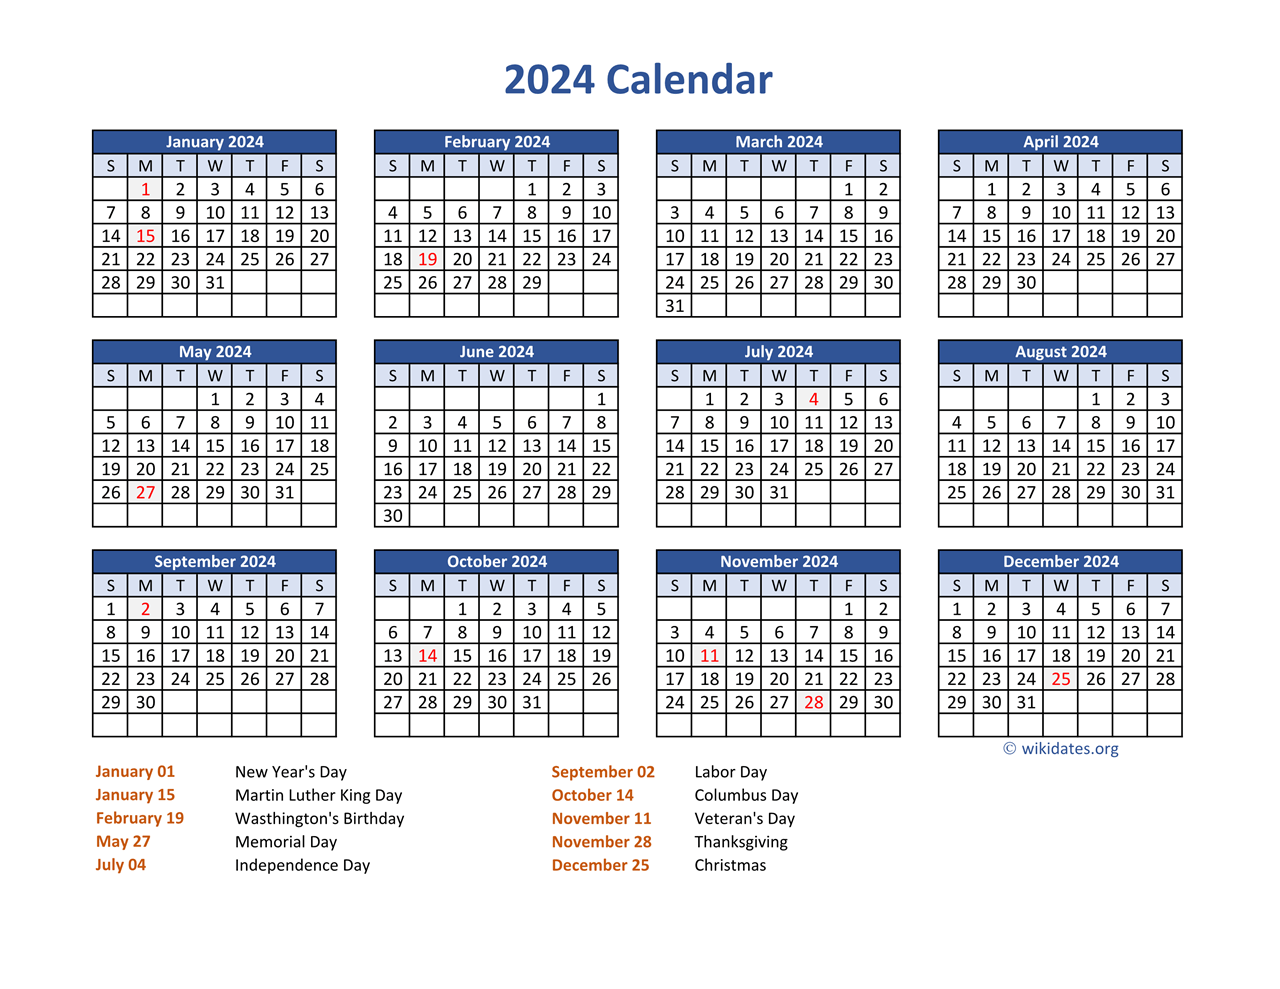 Pdf Calendar 2024 With Federal Holidays | Wikidates for 2024 Printable Calendar One Page With Federal Holidays